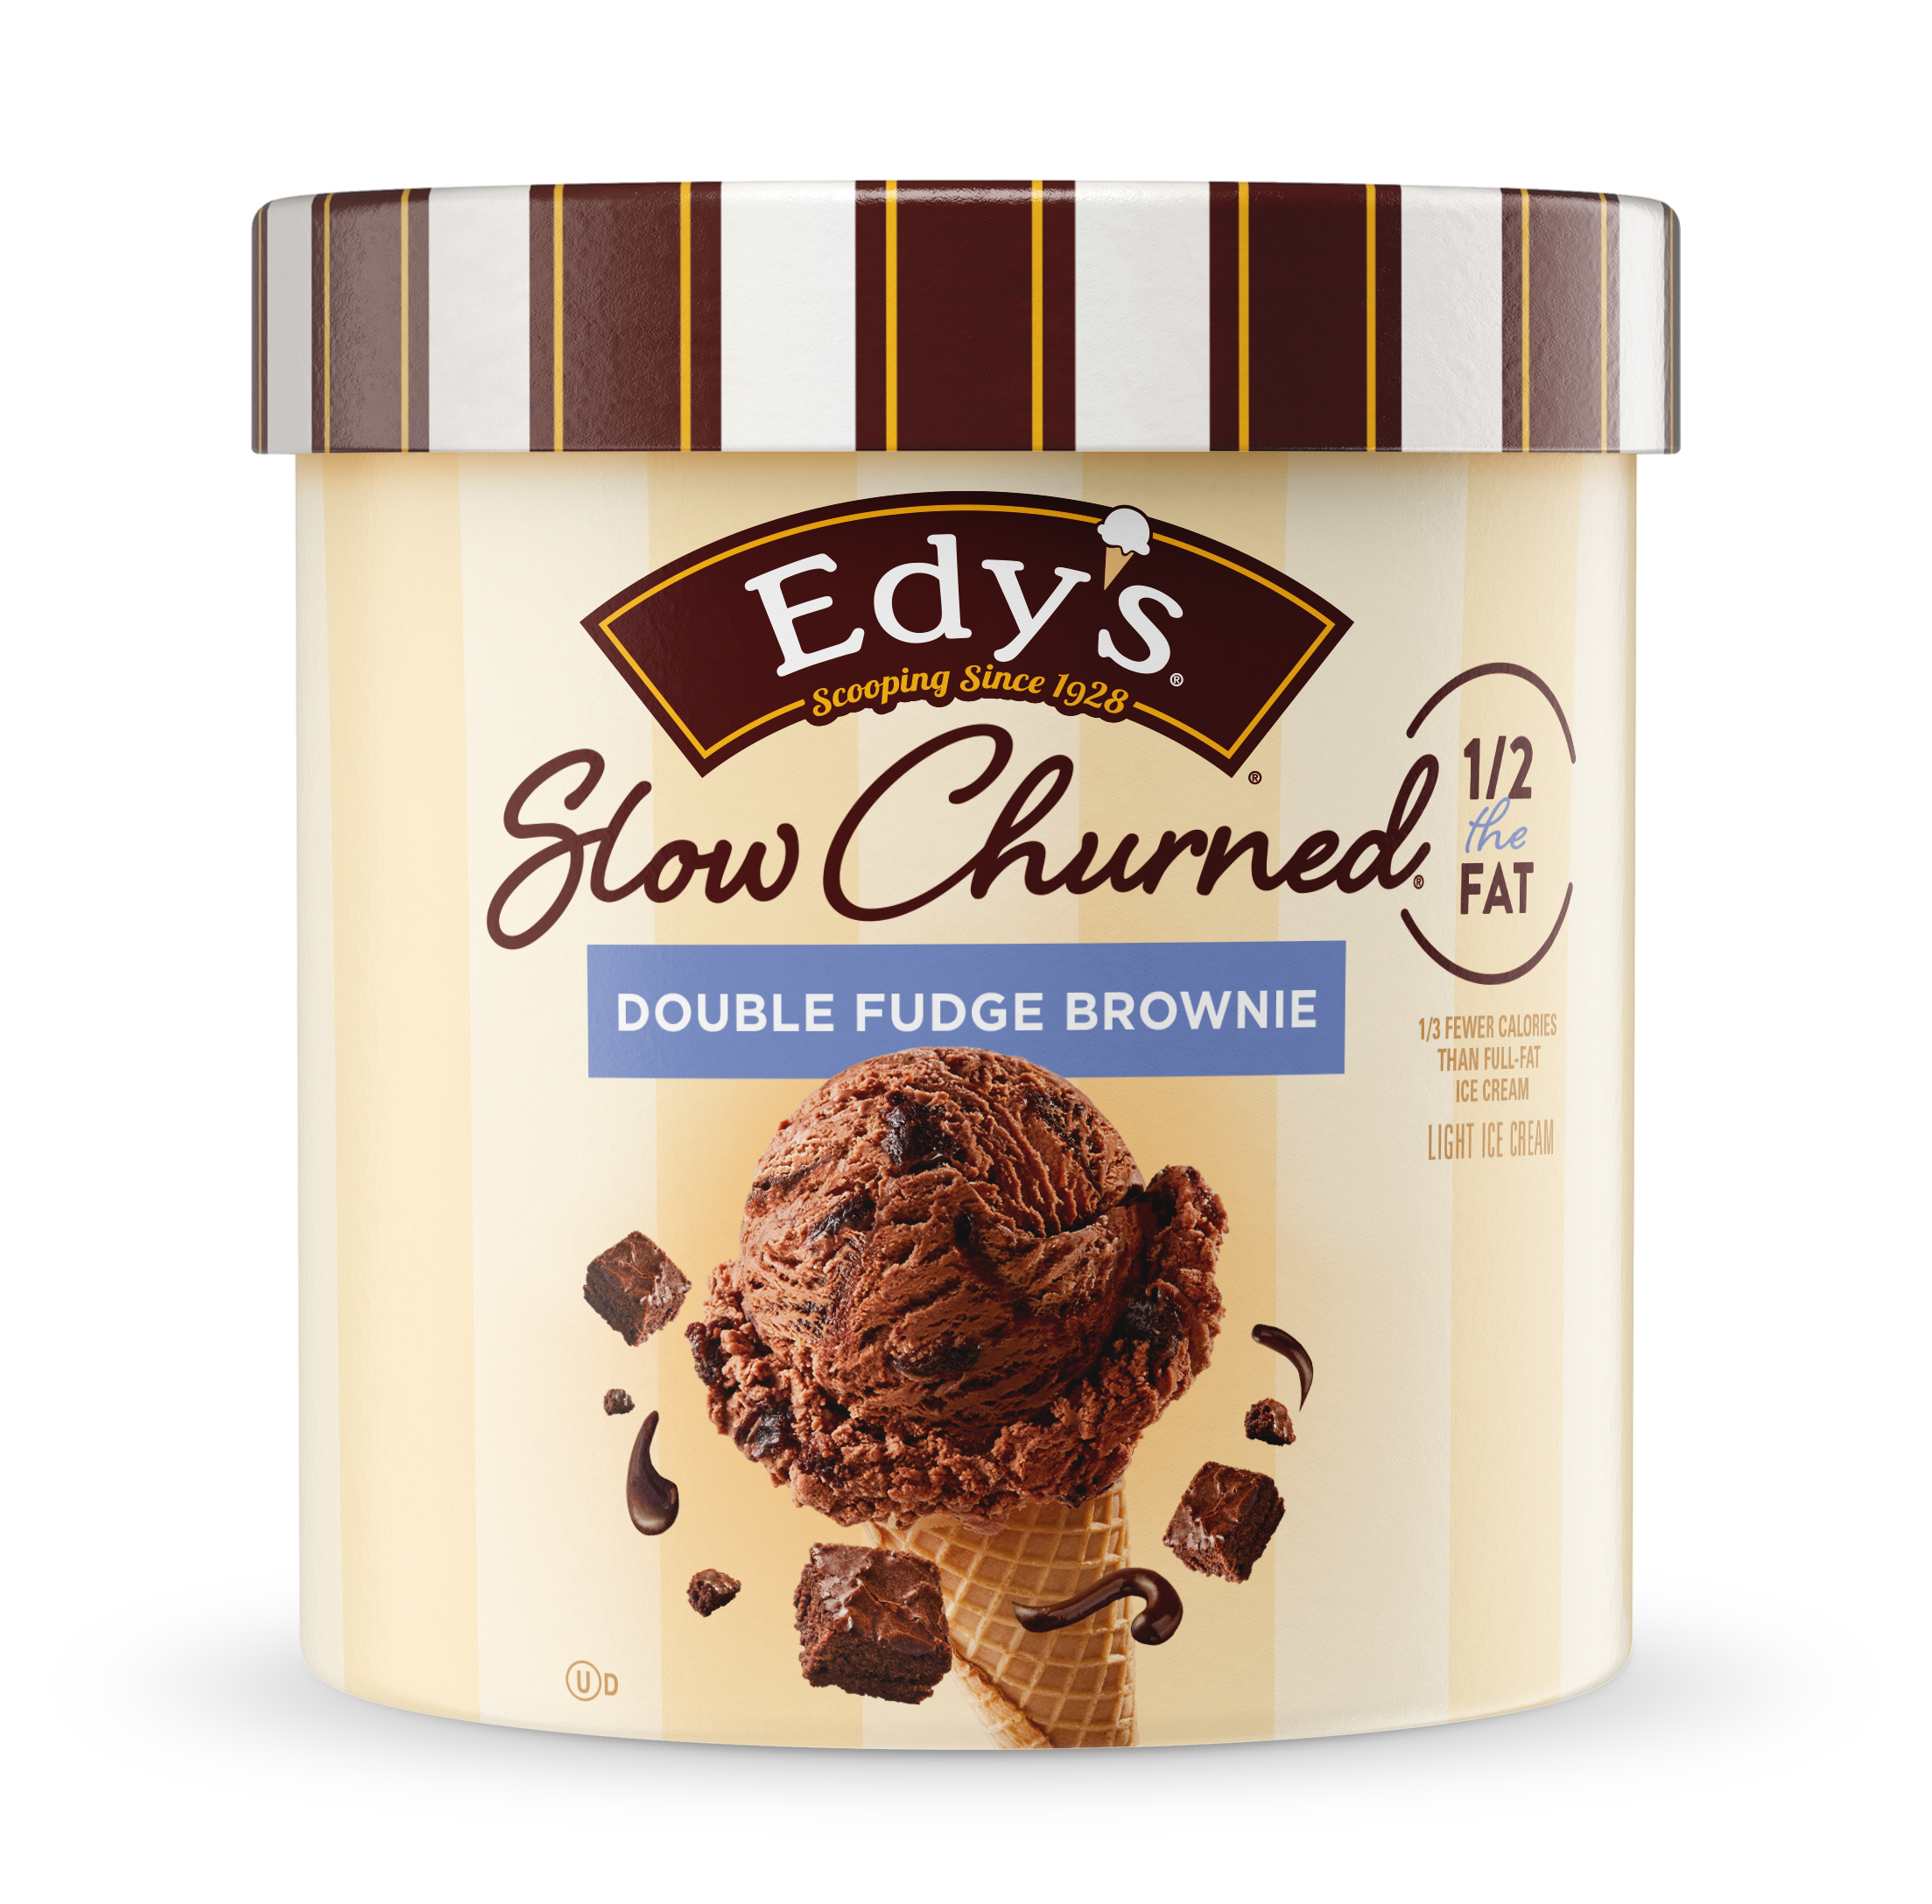 Carton of Edy's slow-churned double fudge brownie ice cream